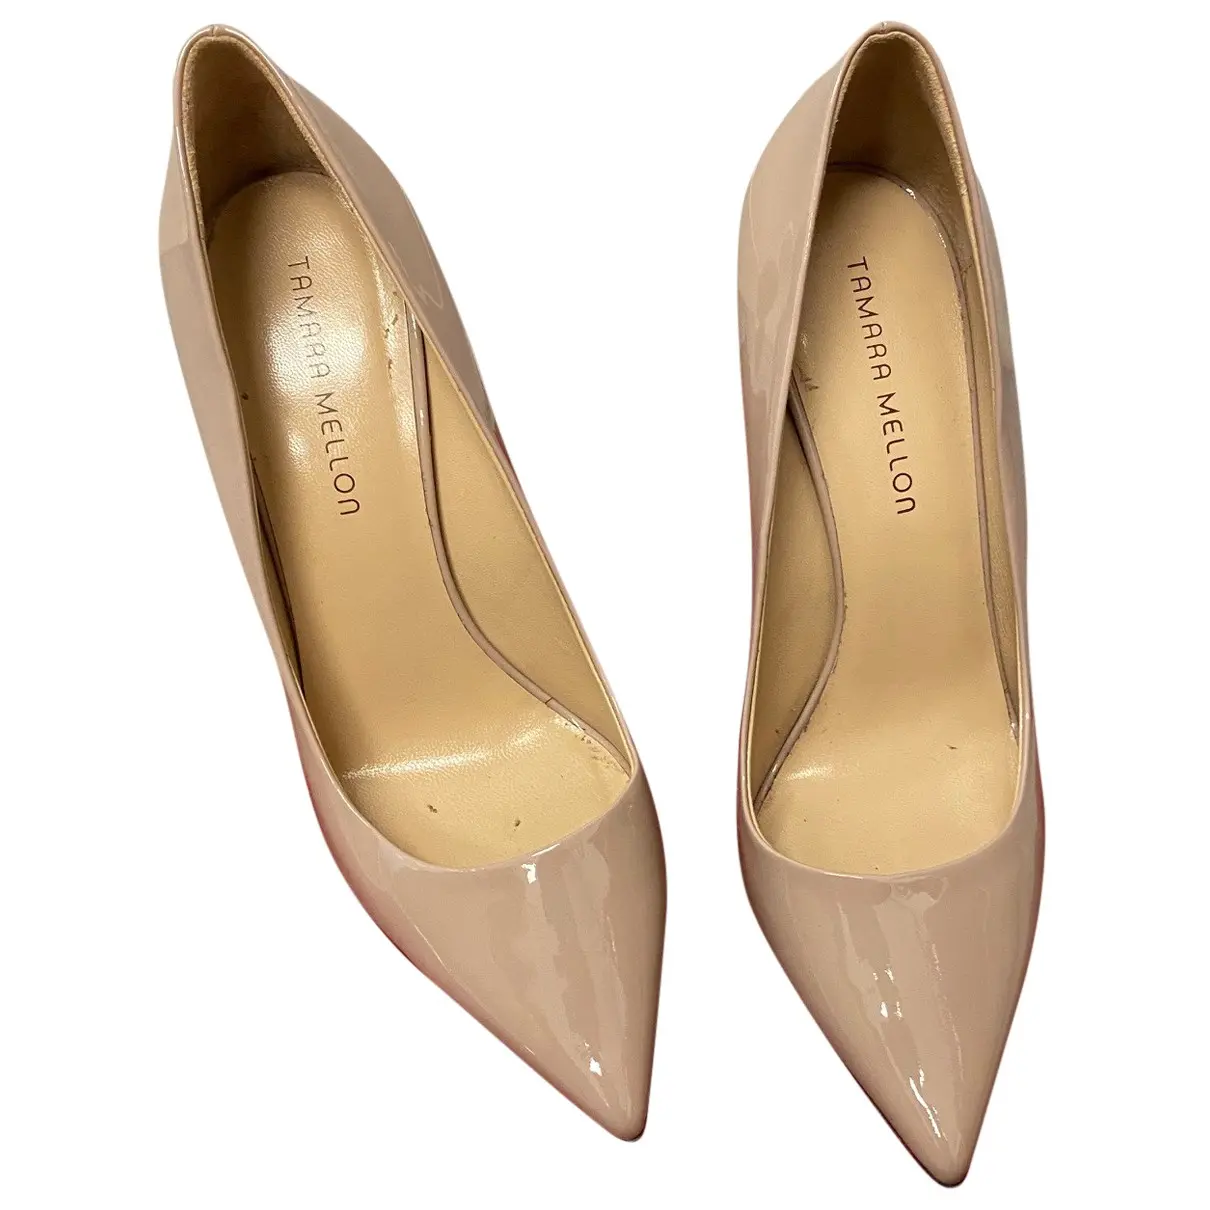 Patent leather heels Tamara Mellon